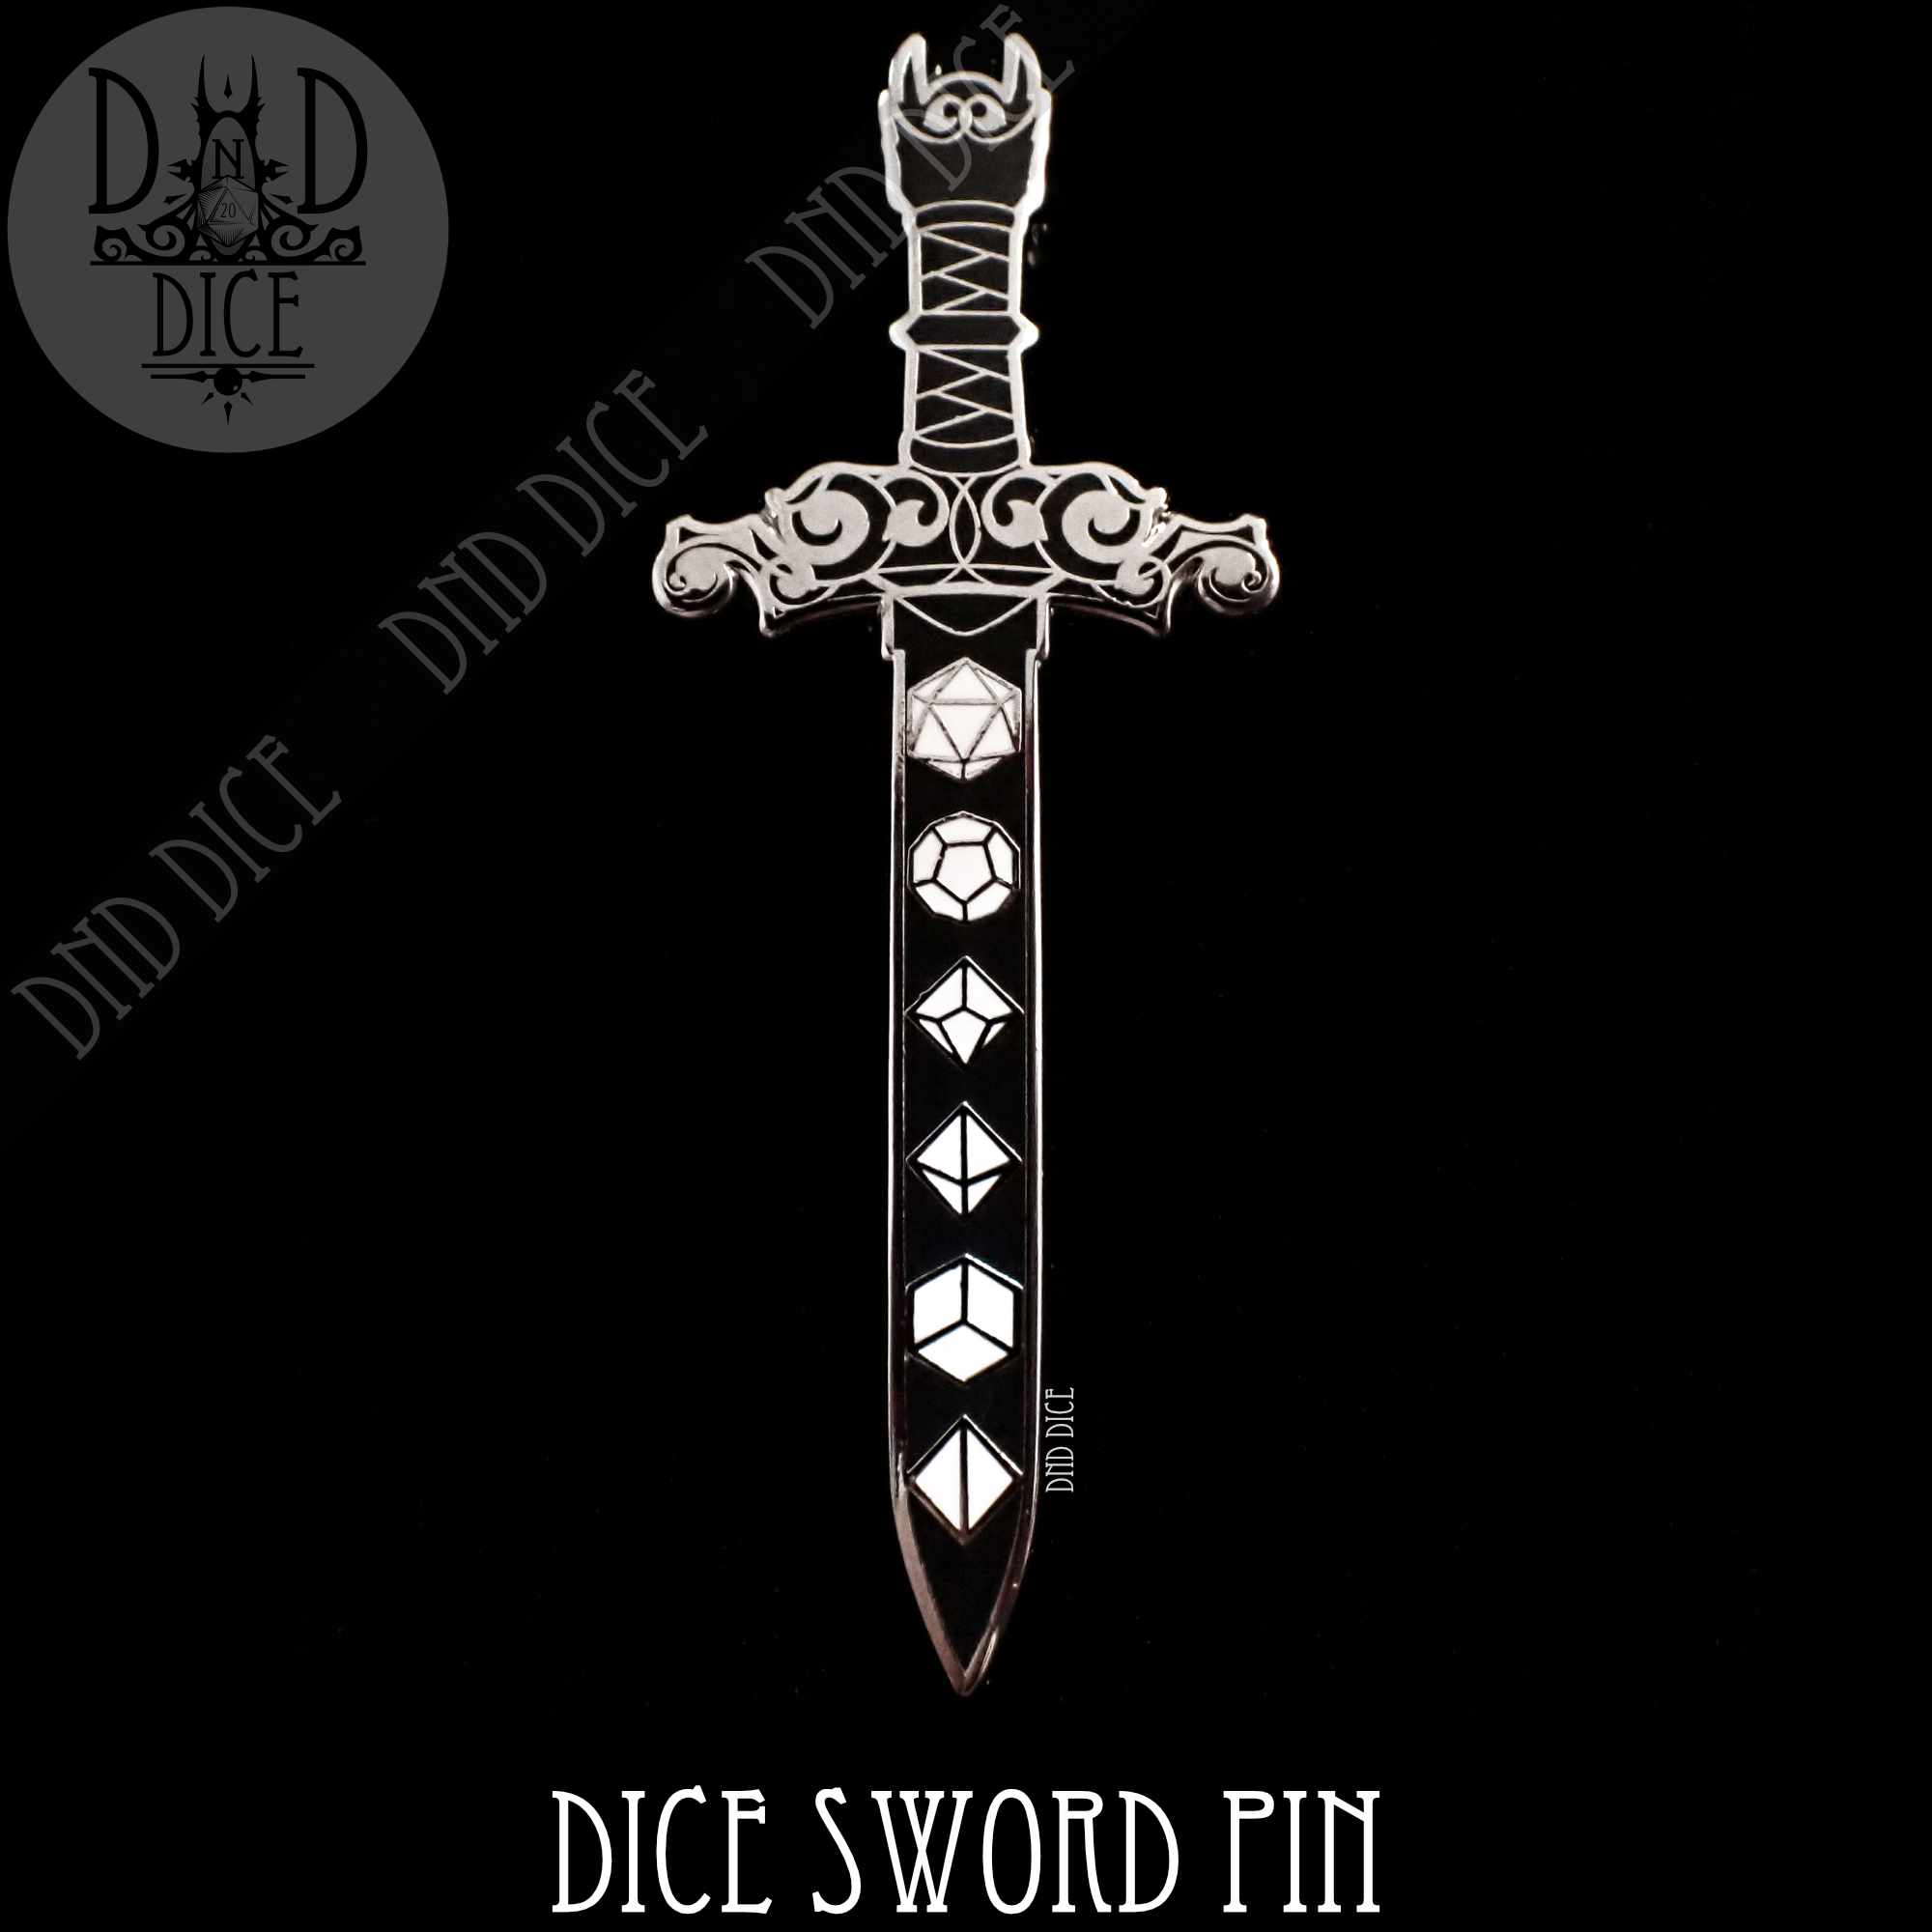 Dice Sword Pin